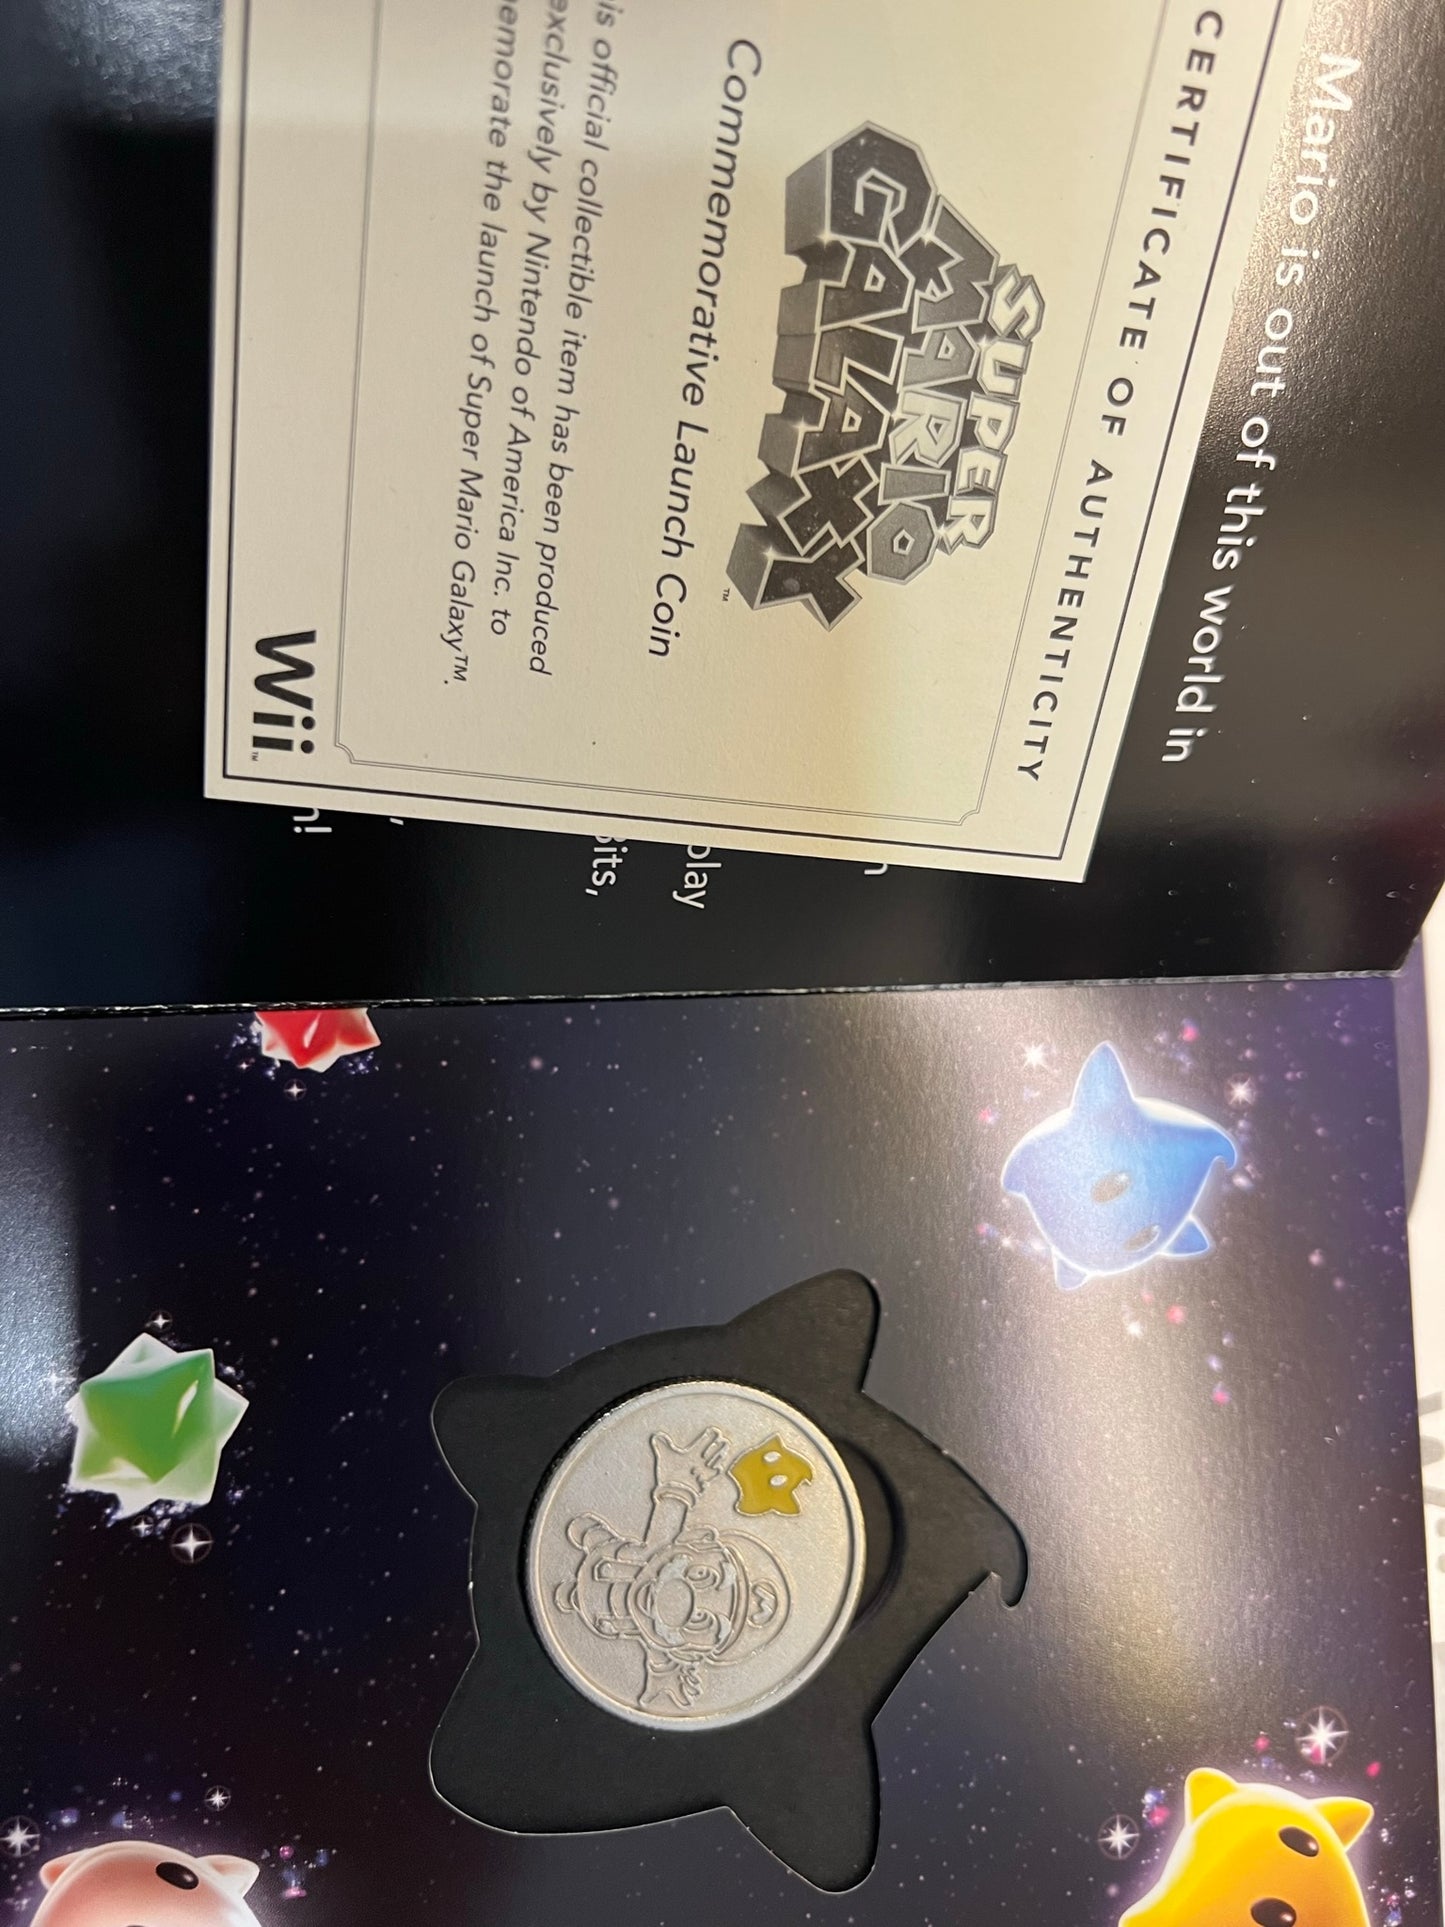 Super Mario Galaxy Commemorative Launch Coin Nintendo Wii